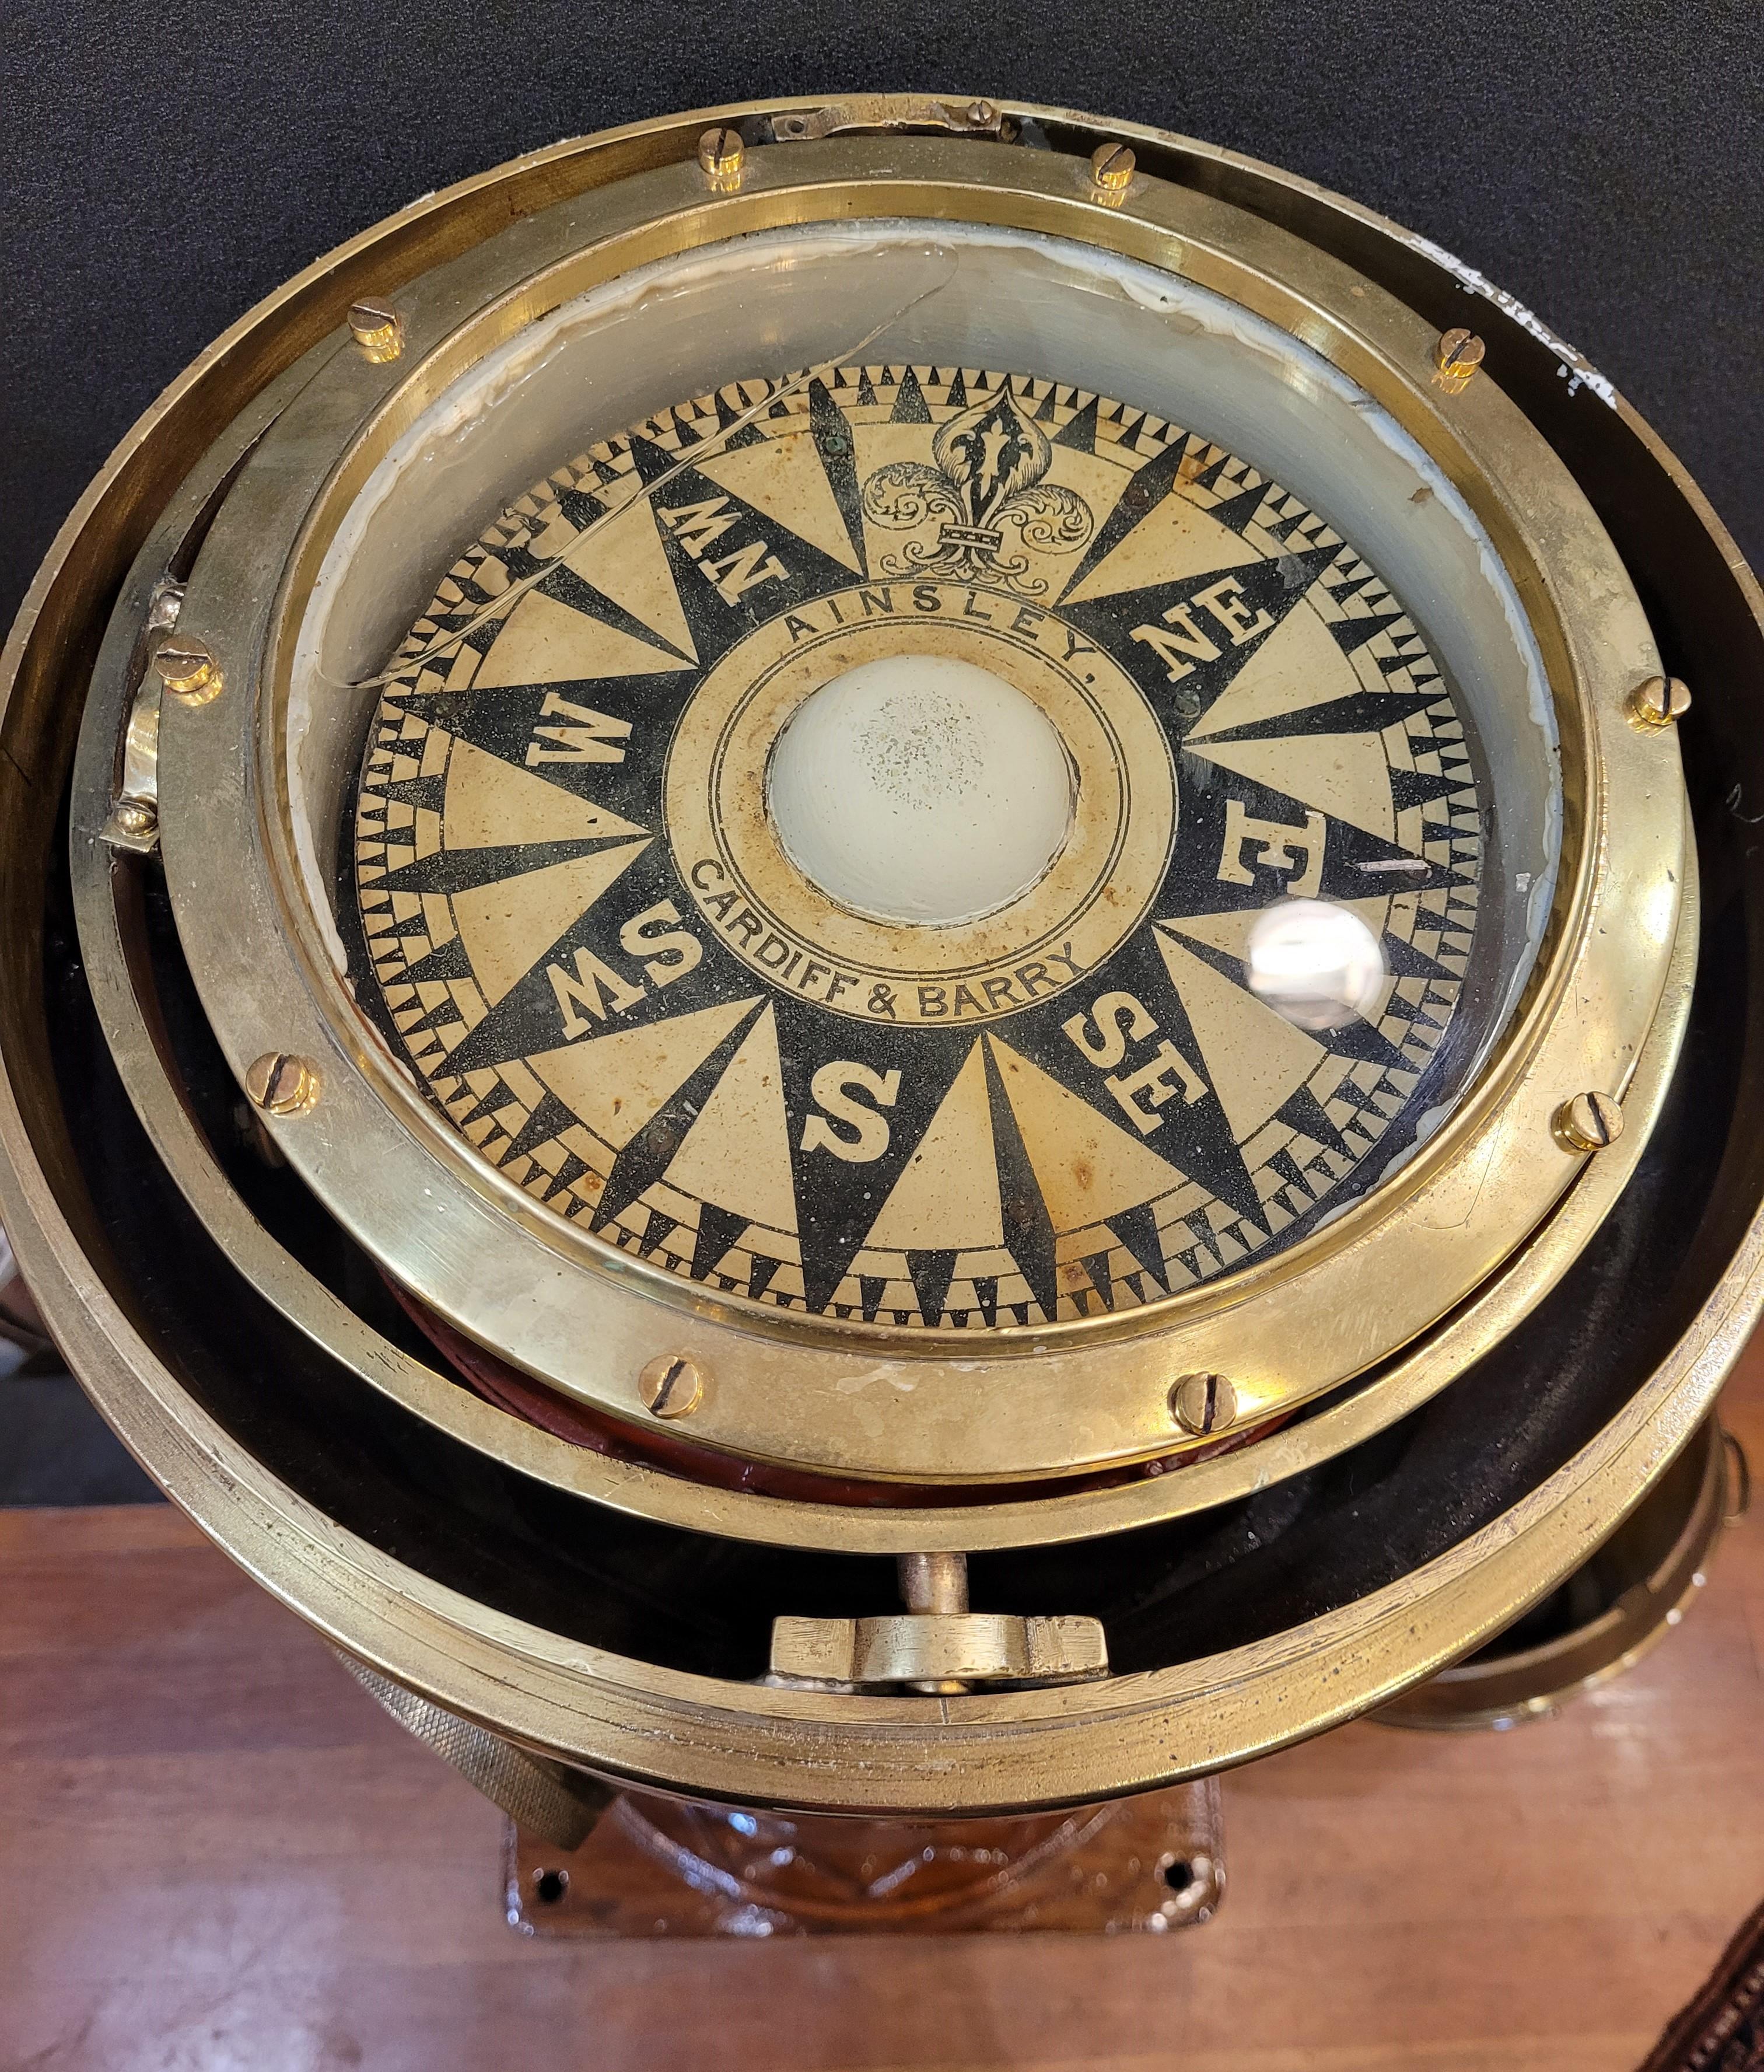 English Compass Ship's log, 40's, teak and brass, 19th century compass. XIX 1